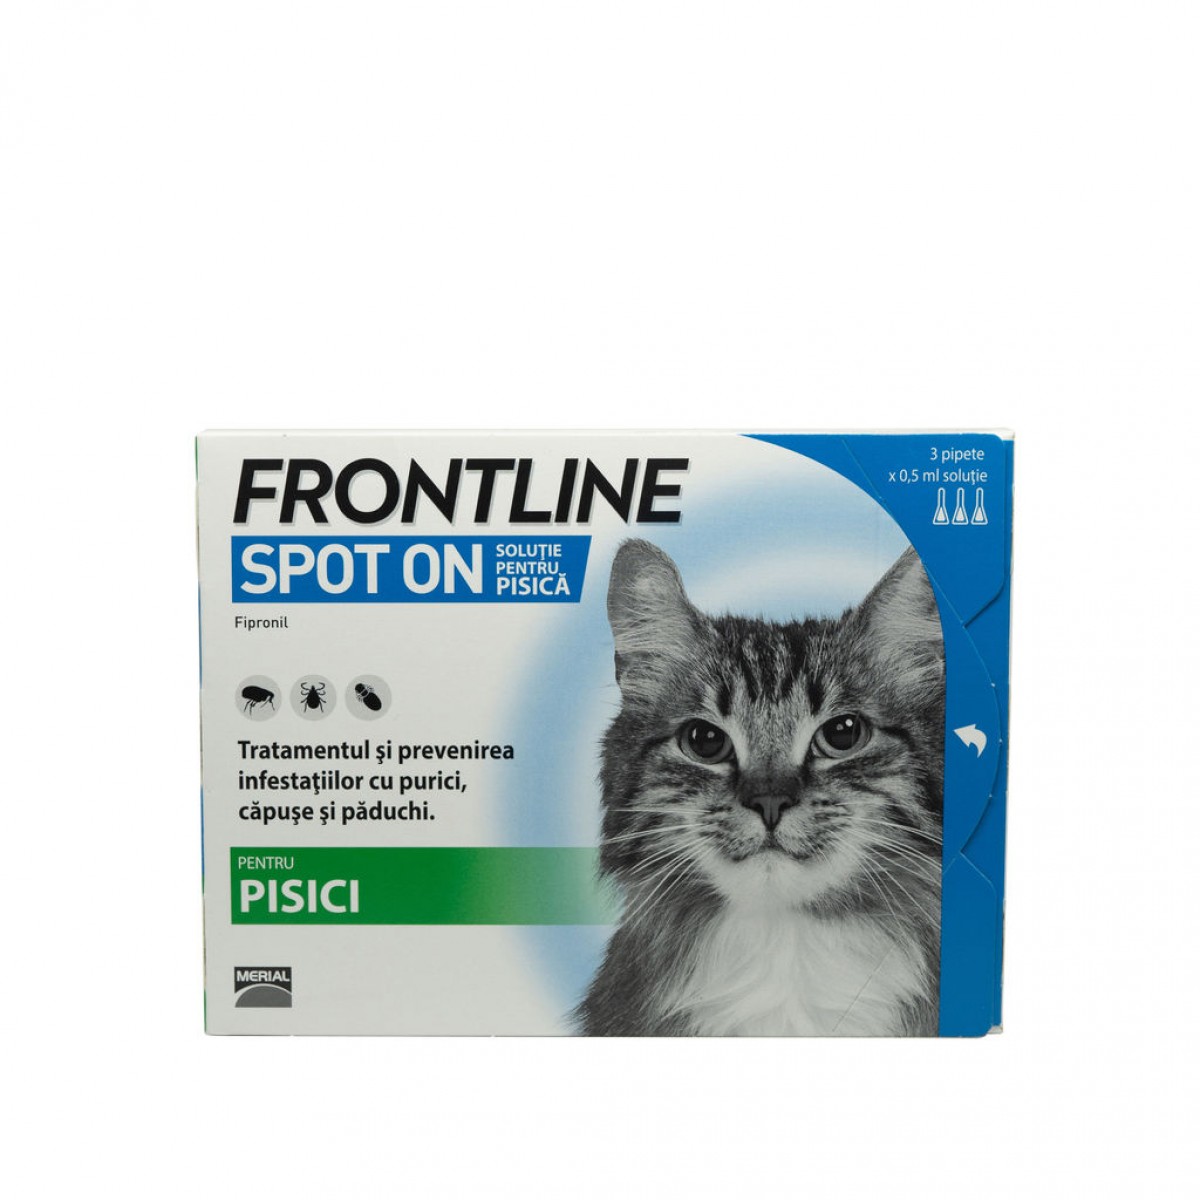 Frontline Spot-On pentru pisici, 3 pipete antiparazitare, Antiparazitare externe, Antiparazitare, Pisici 